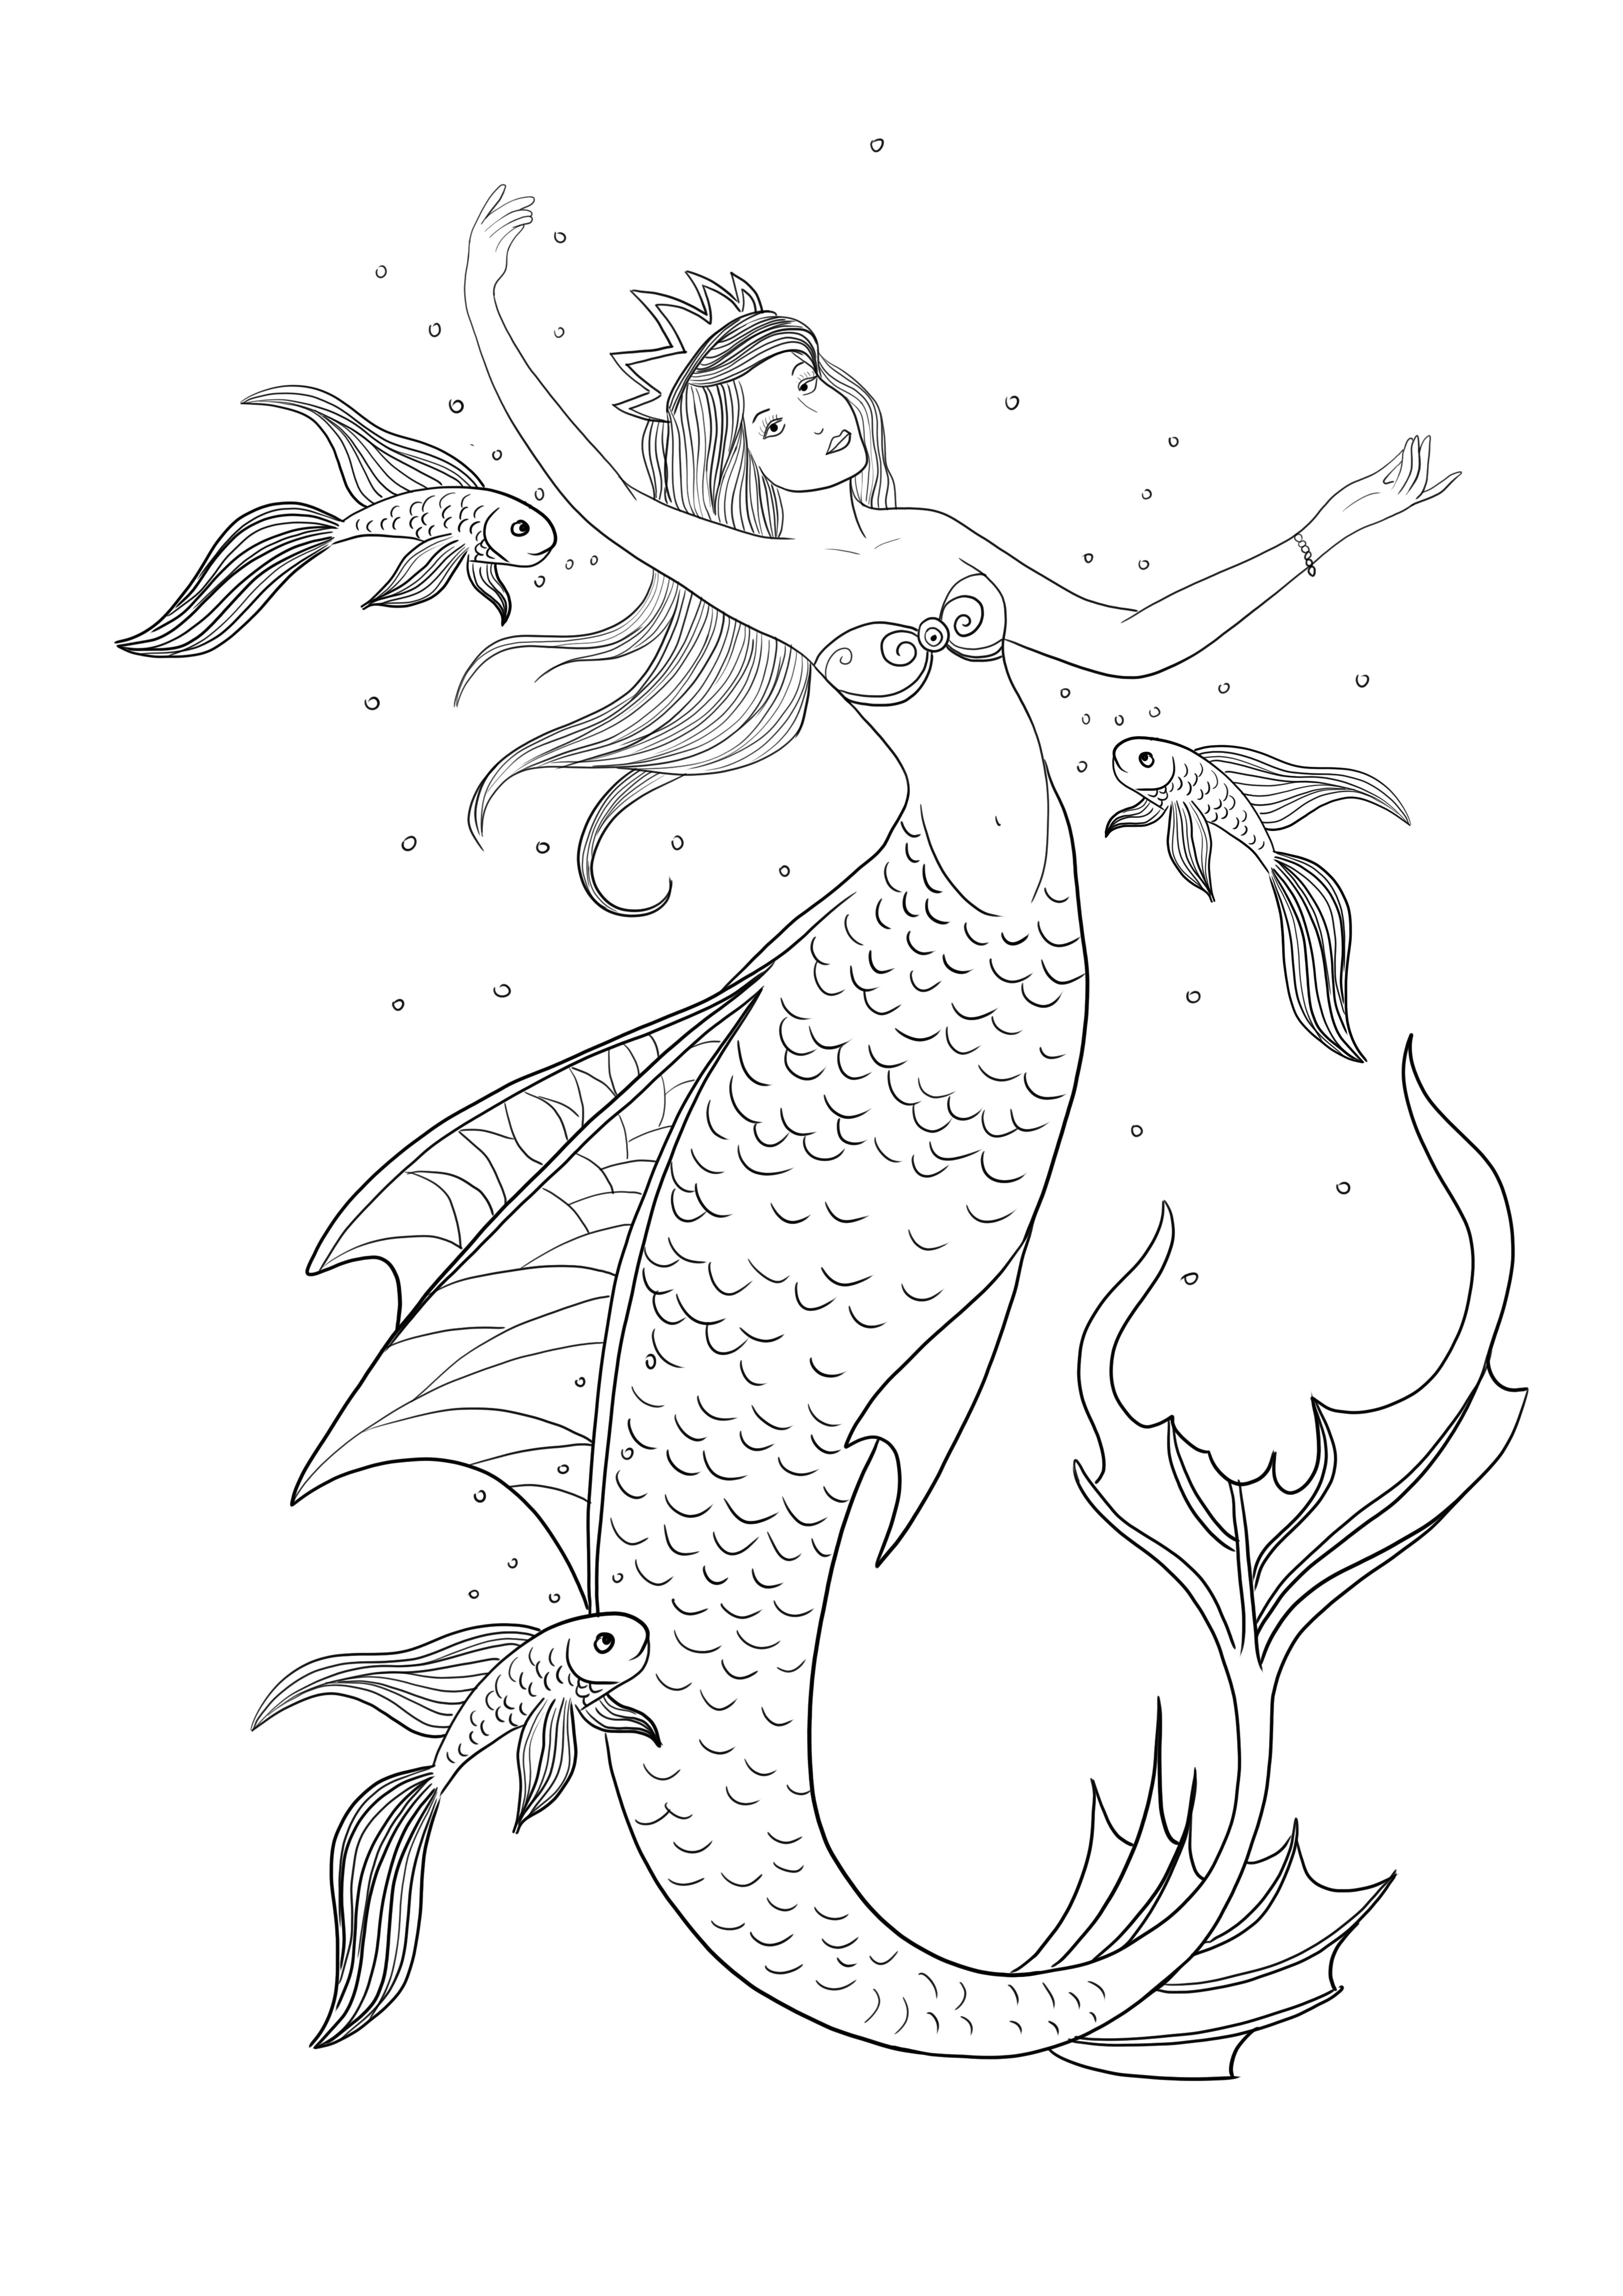 Gracious mermaid dancing free coloring and printing page